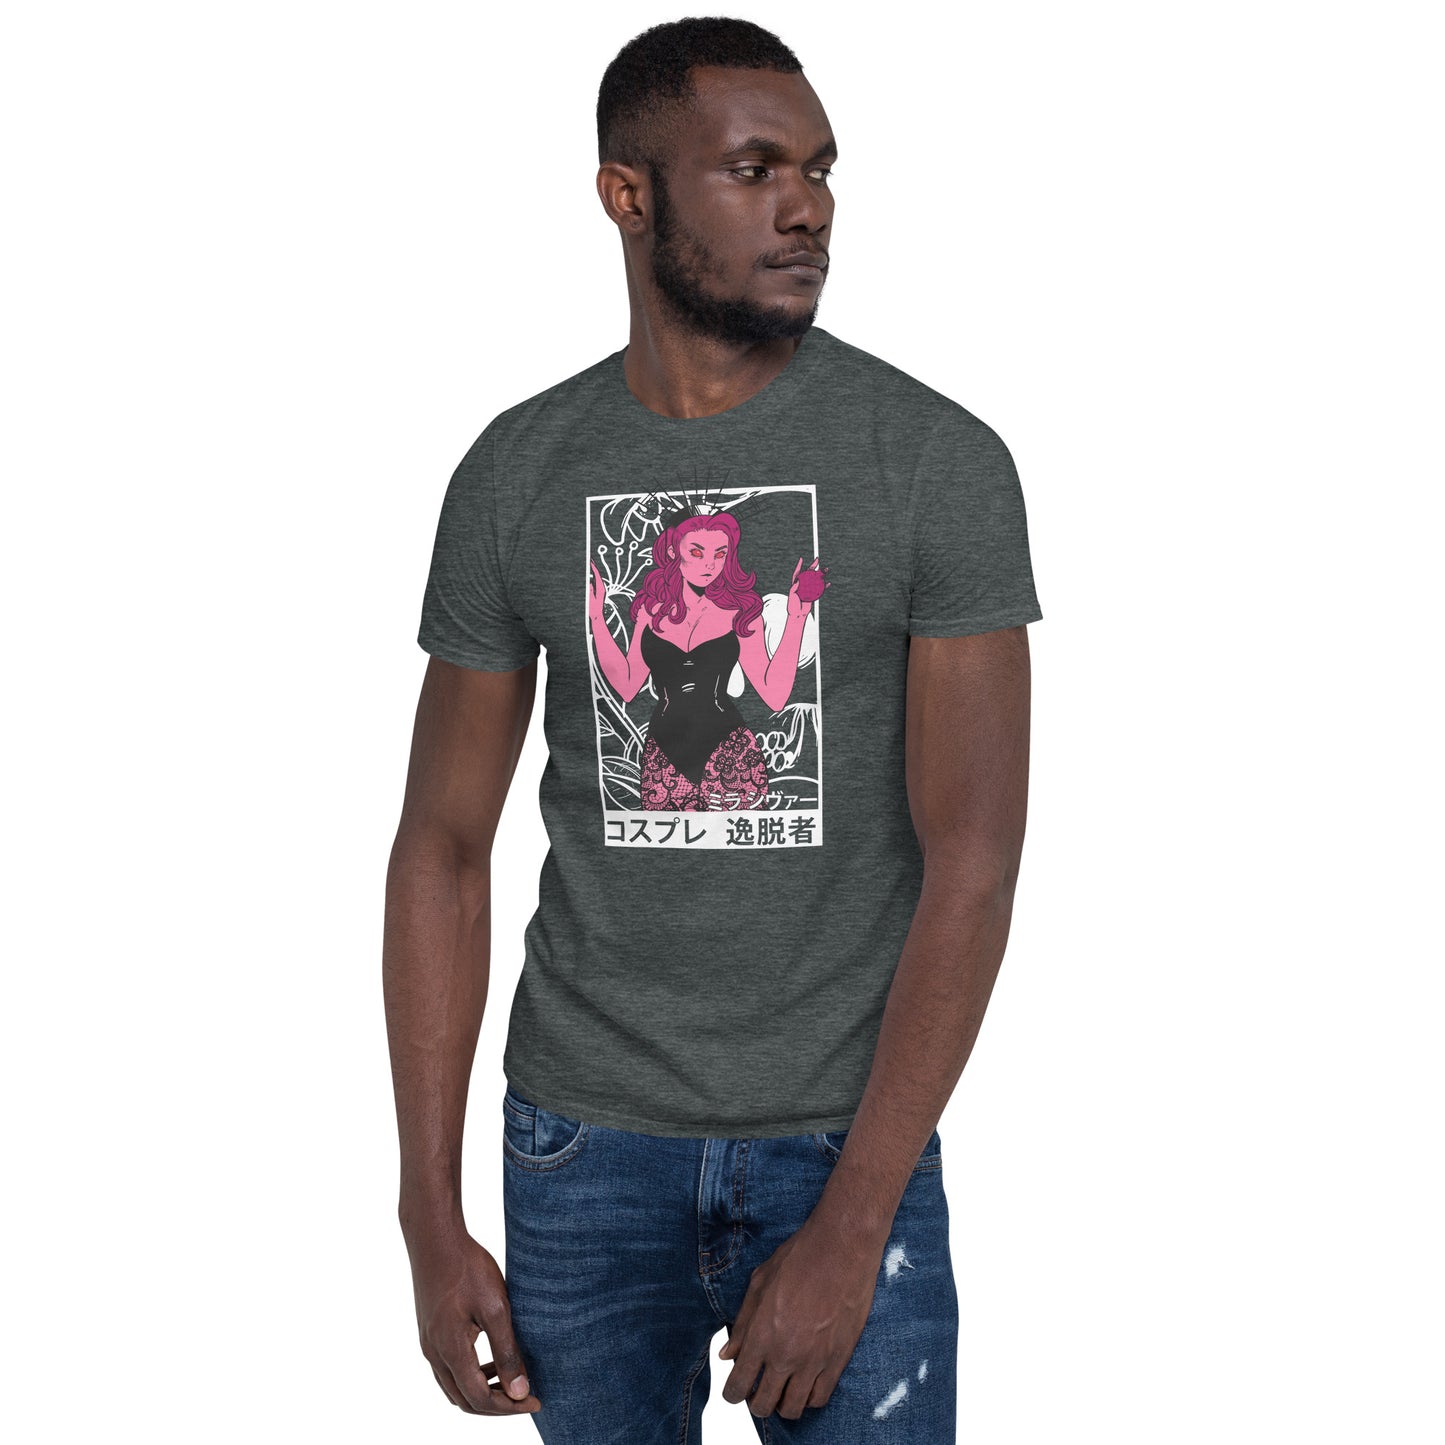 Mira Shiver as Persephone T-Shirt